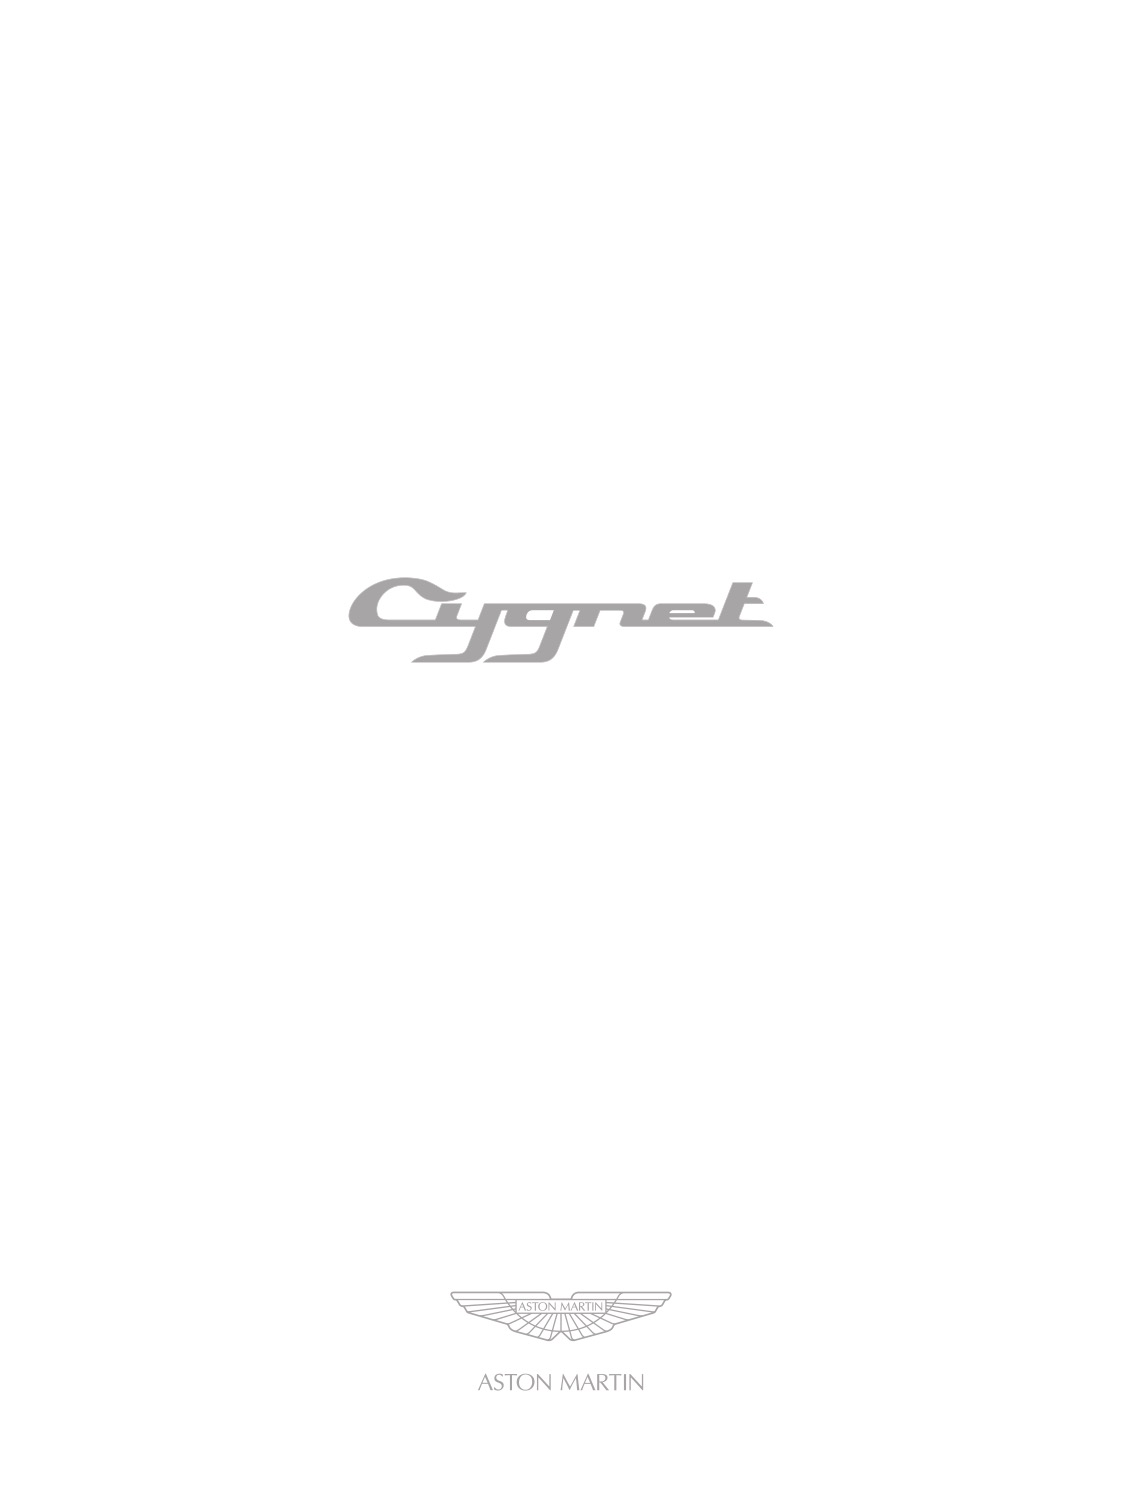 2012 Aston Martin Cygnet Brochure Page 2